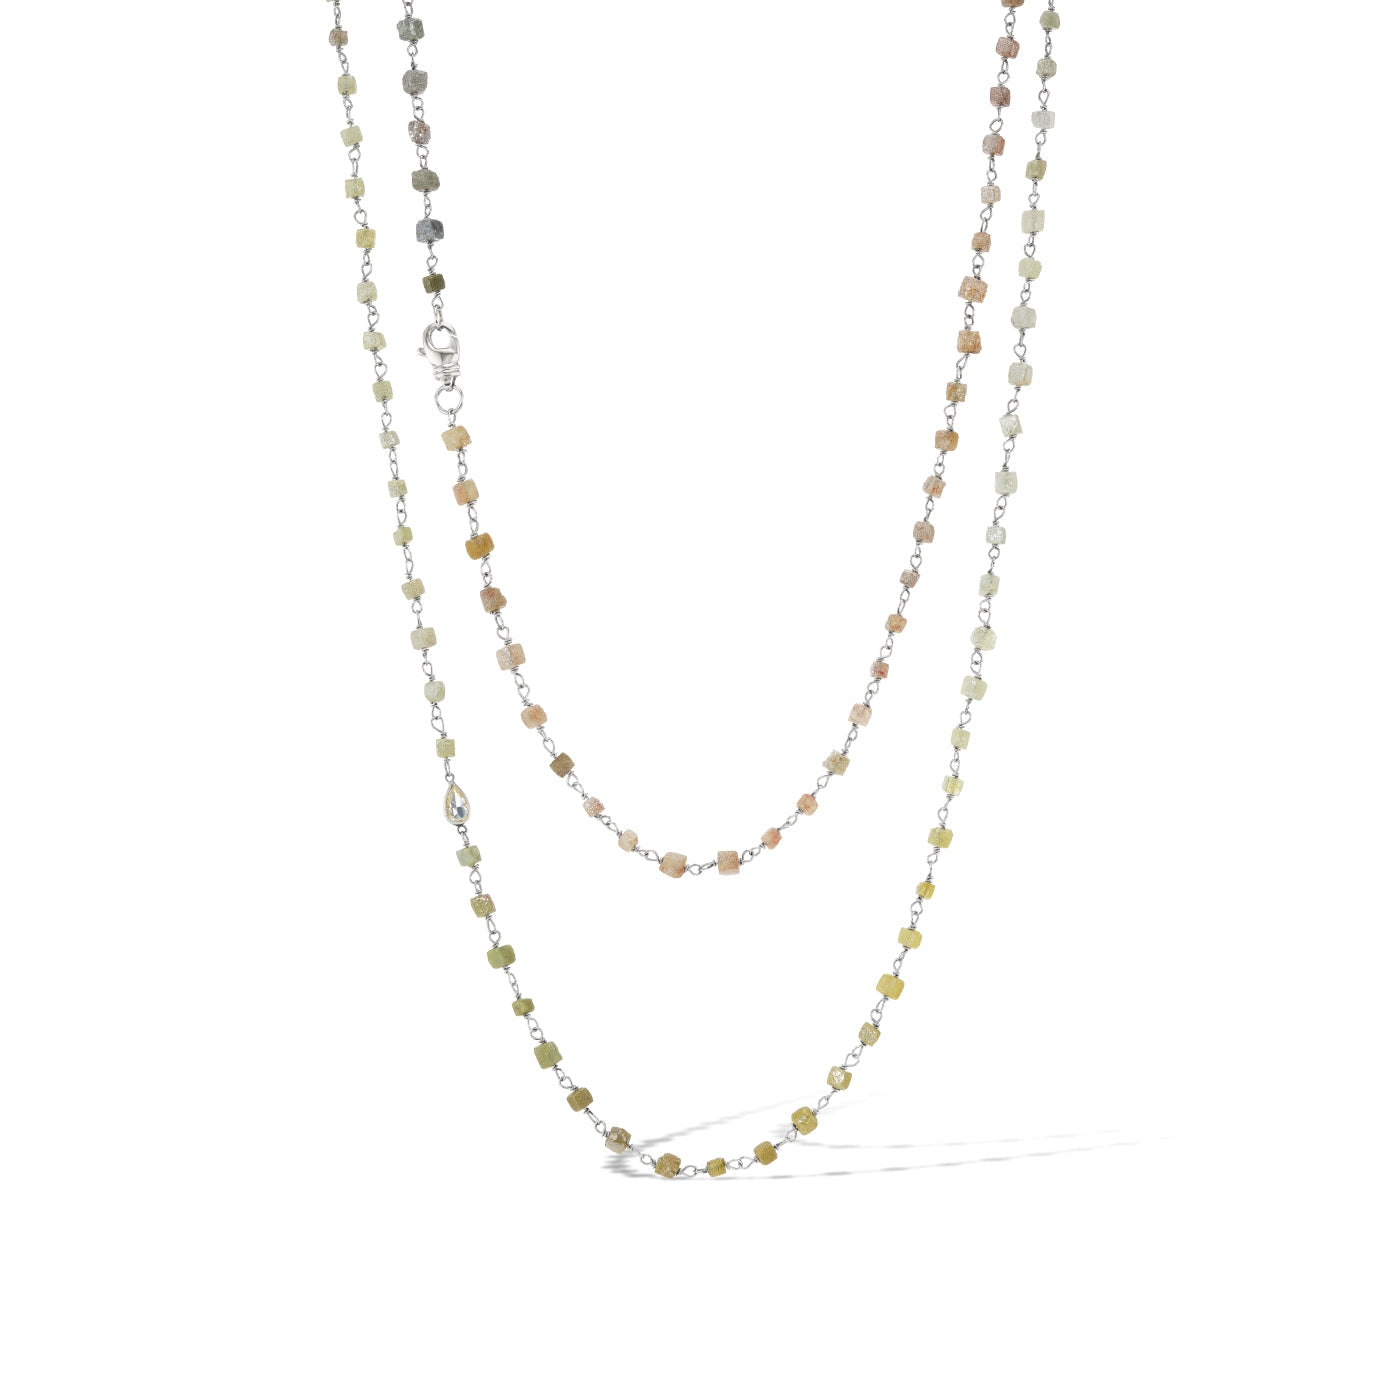 Grey Diamond Bead Chain with Colored Diamond Accent